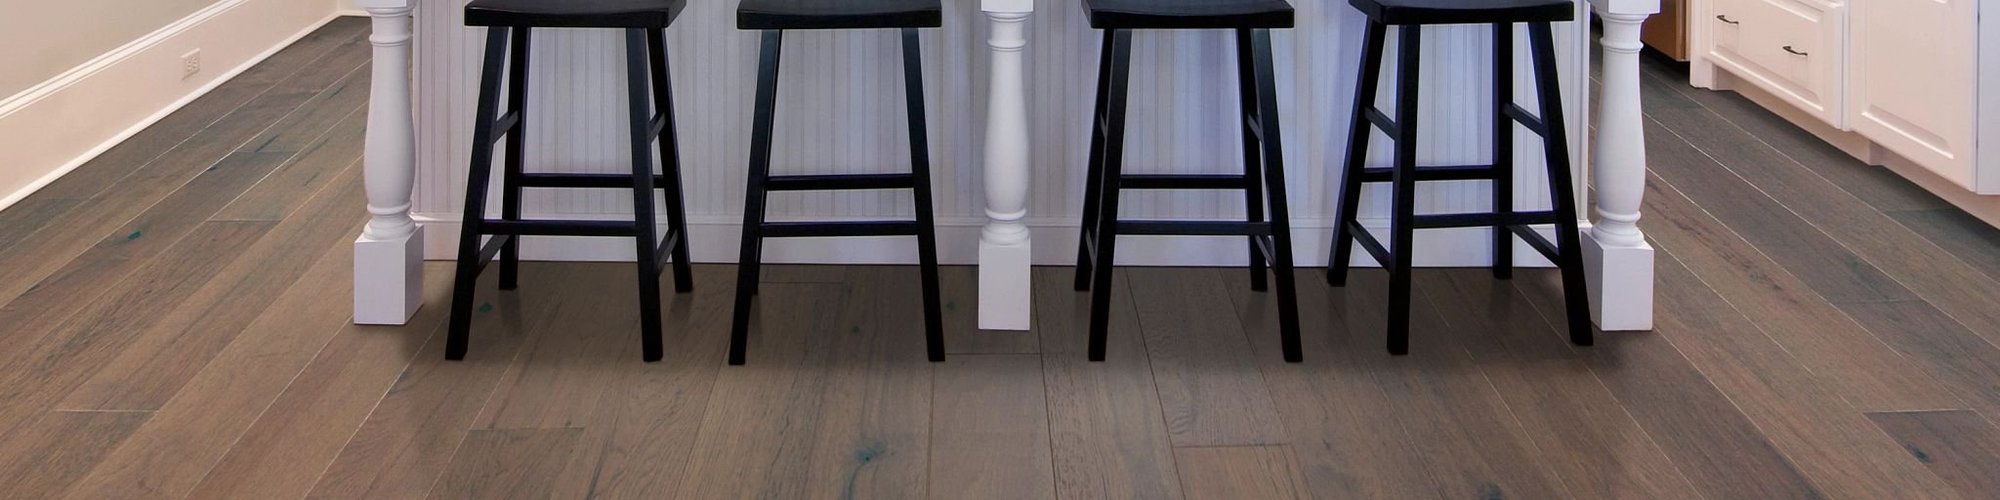 four bar stools - Nantahala Flooring Outlet